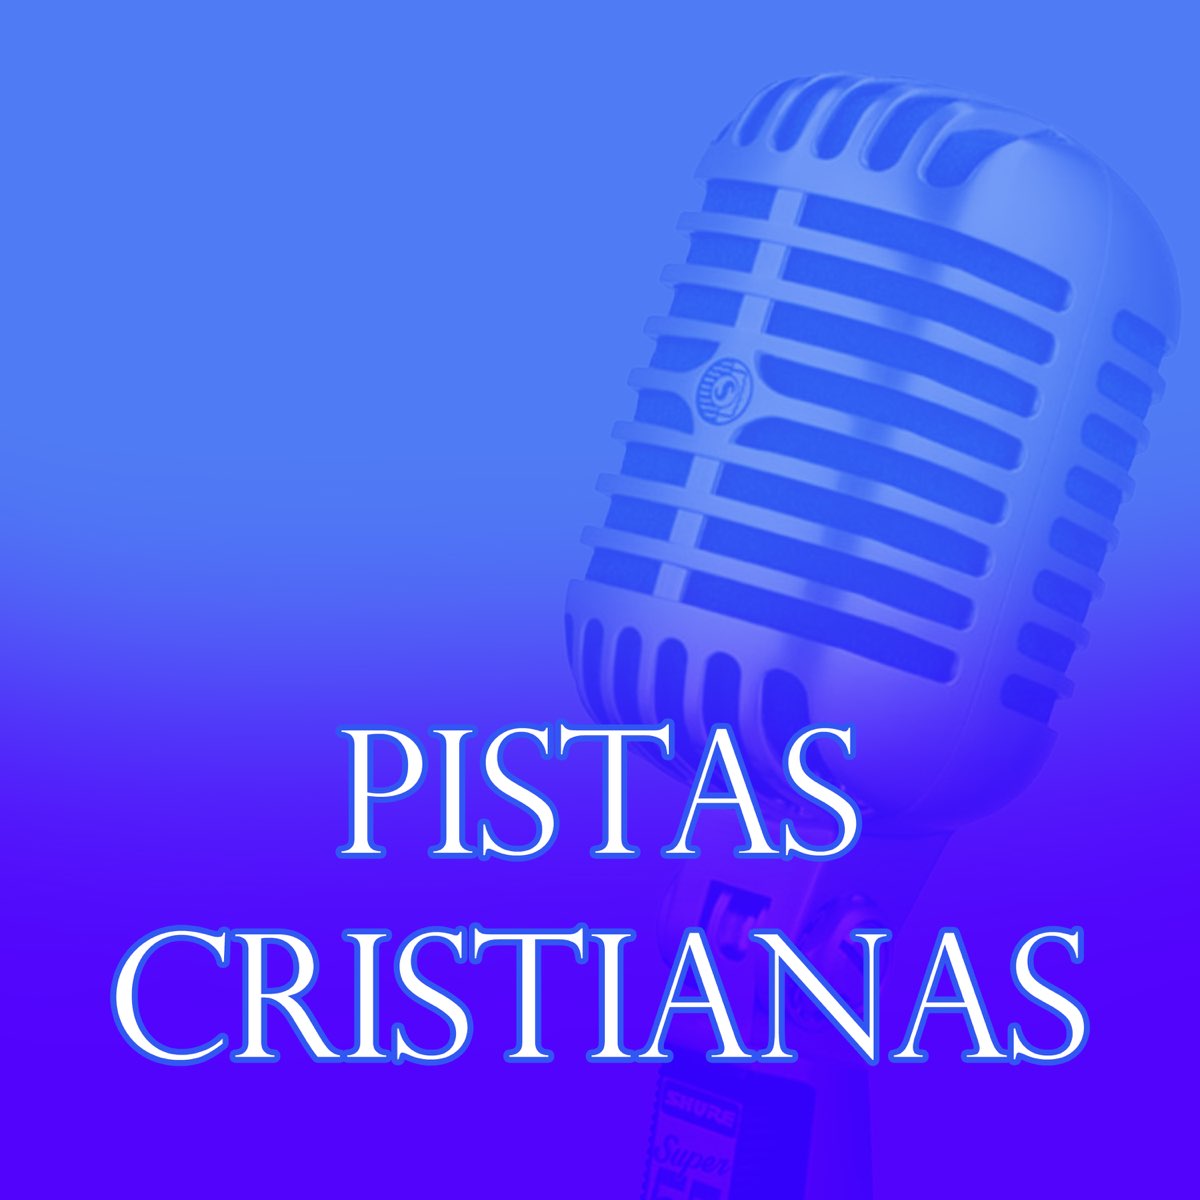 Pistas Cristianas - EP de Pistas Cristianas en Apple Music